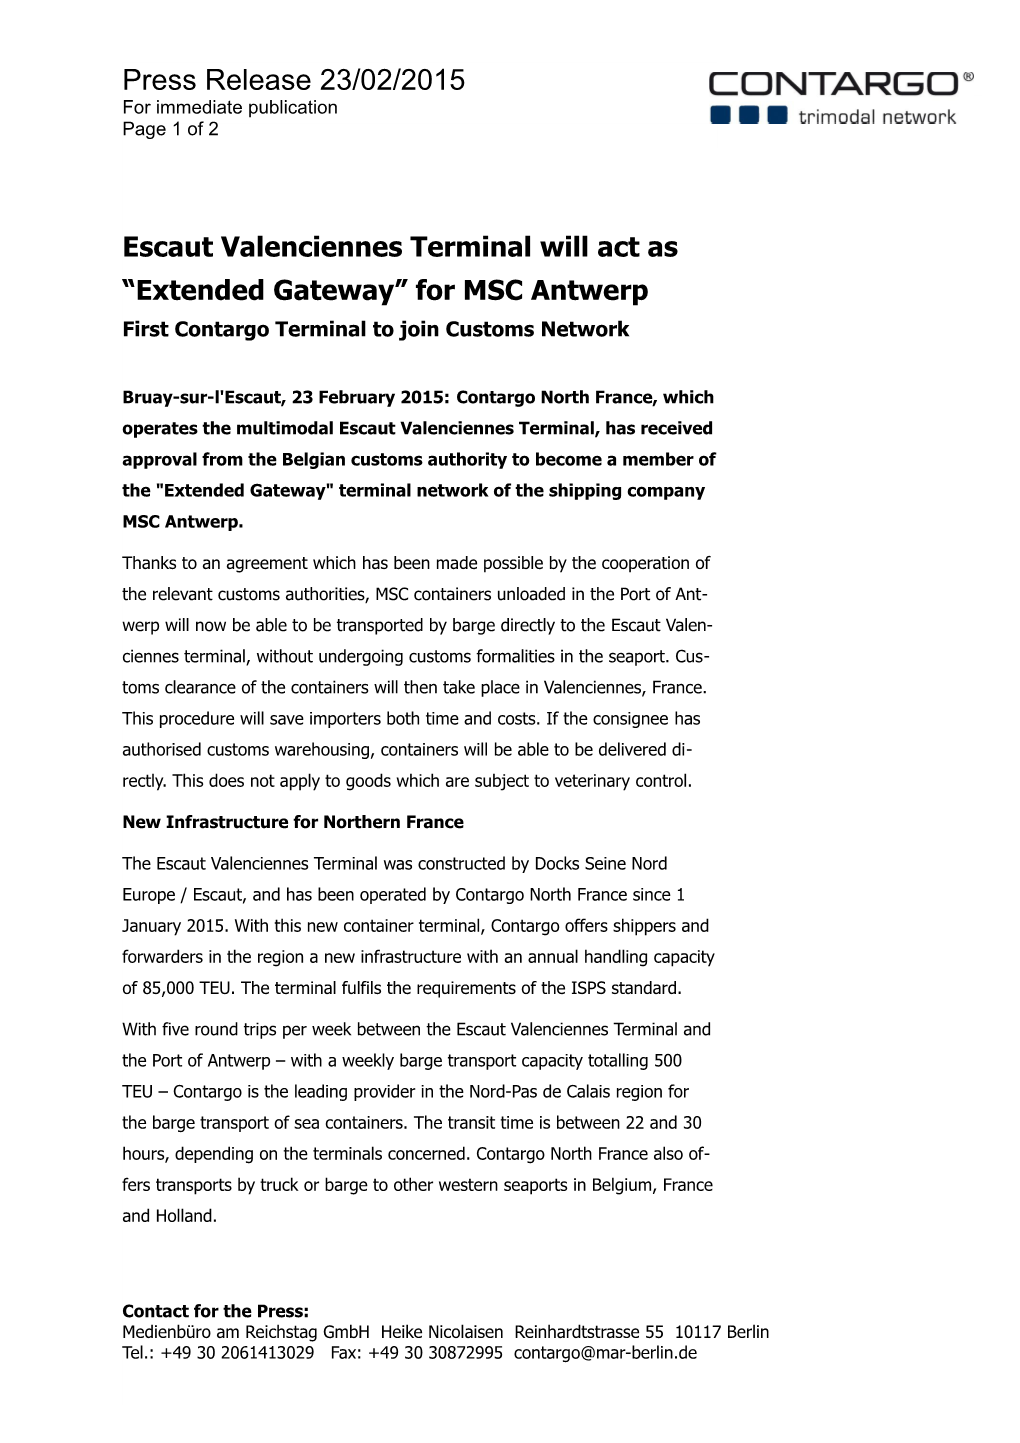 Escaut Valenciennes Terminal Will Act As